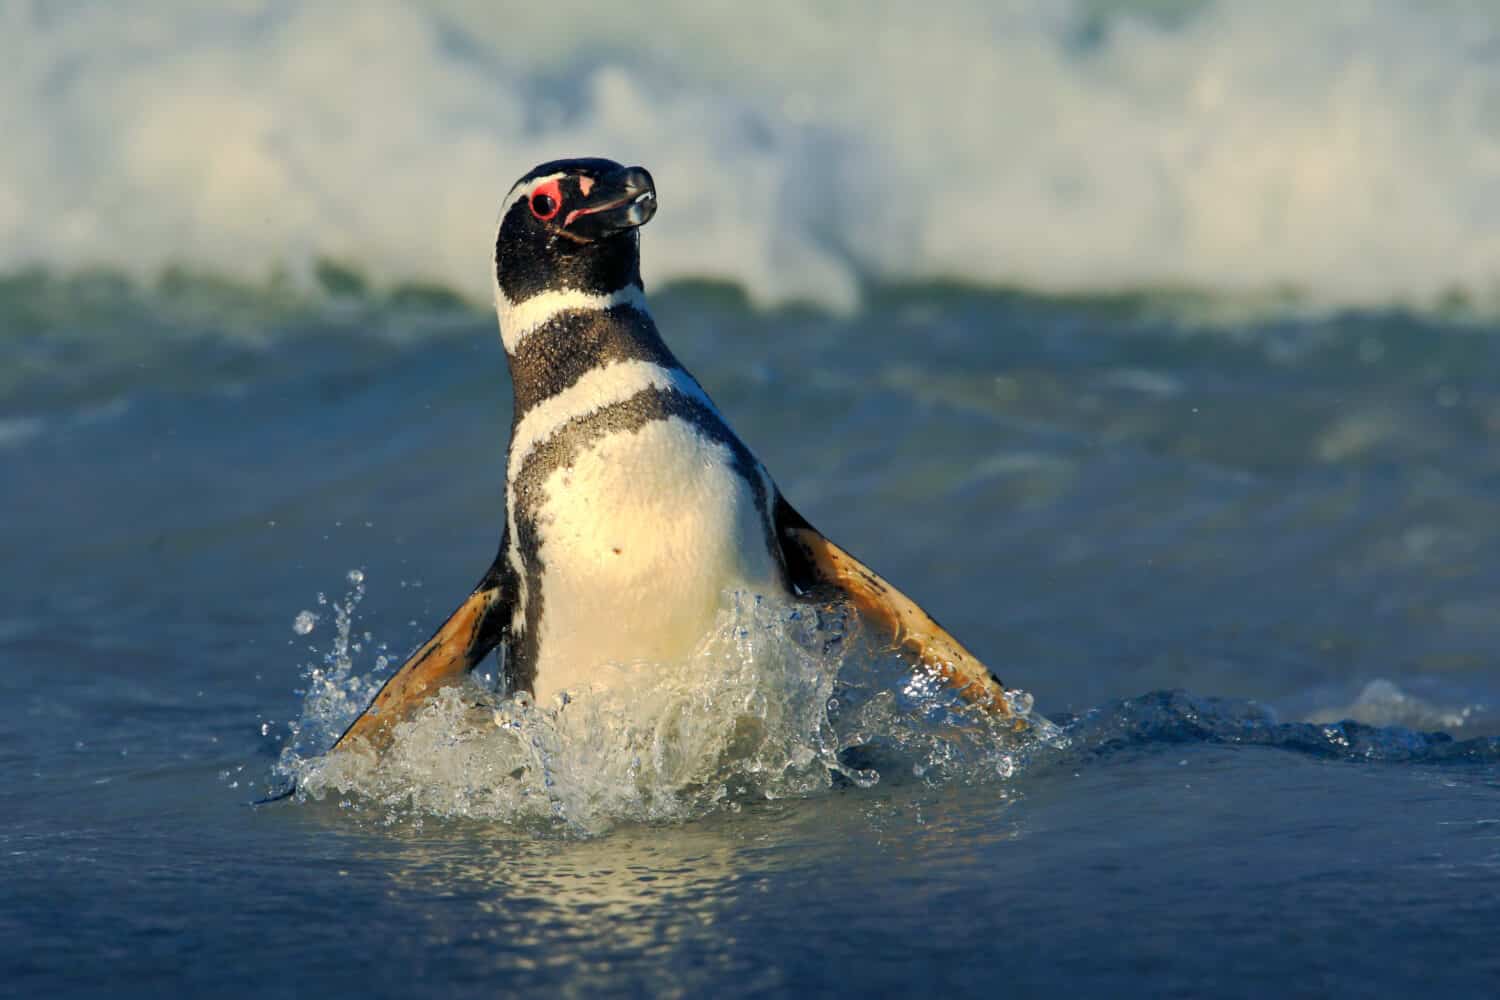 Penguin swiming in the waves. Magellanic penguin and ocean wave in the background, Falkland Islands, Antarctica.